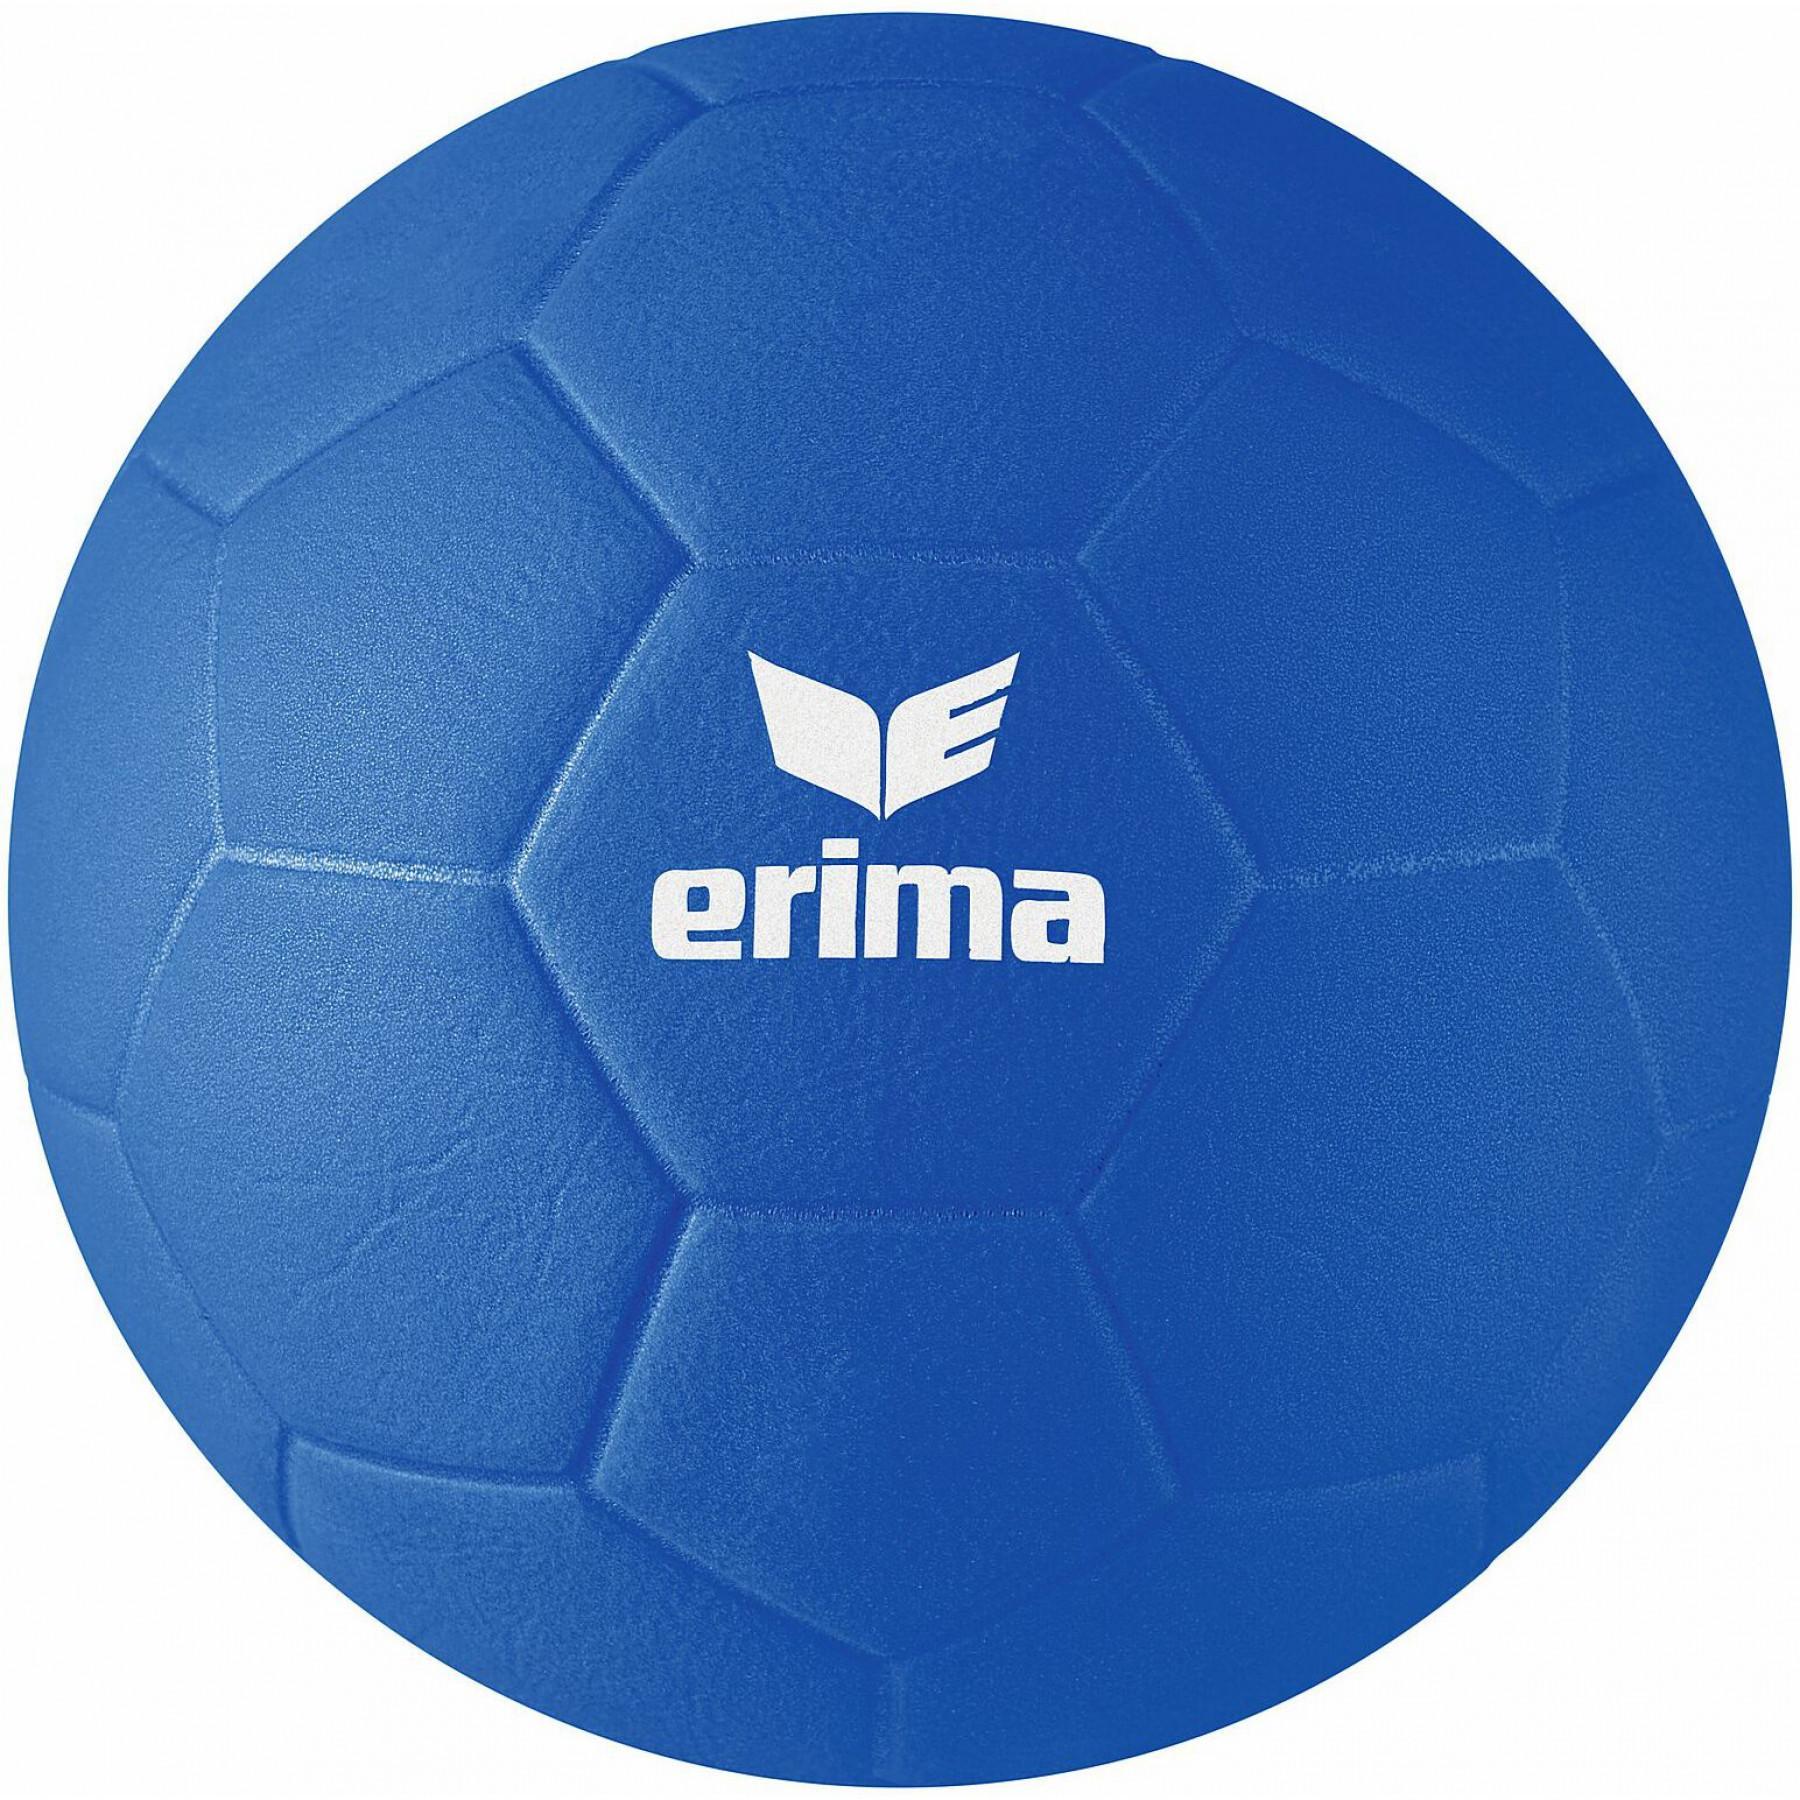 Lot von 10 Beach-Handballbällen Erima [Taille3]